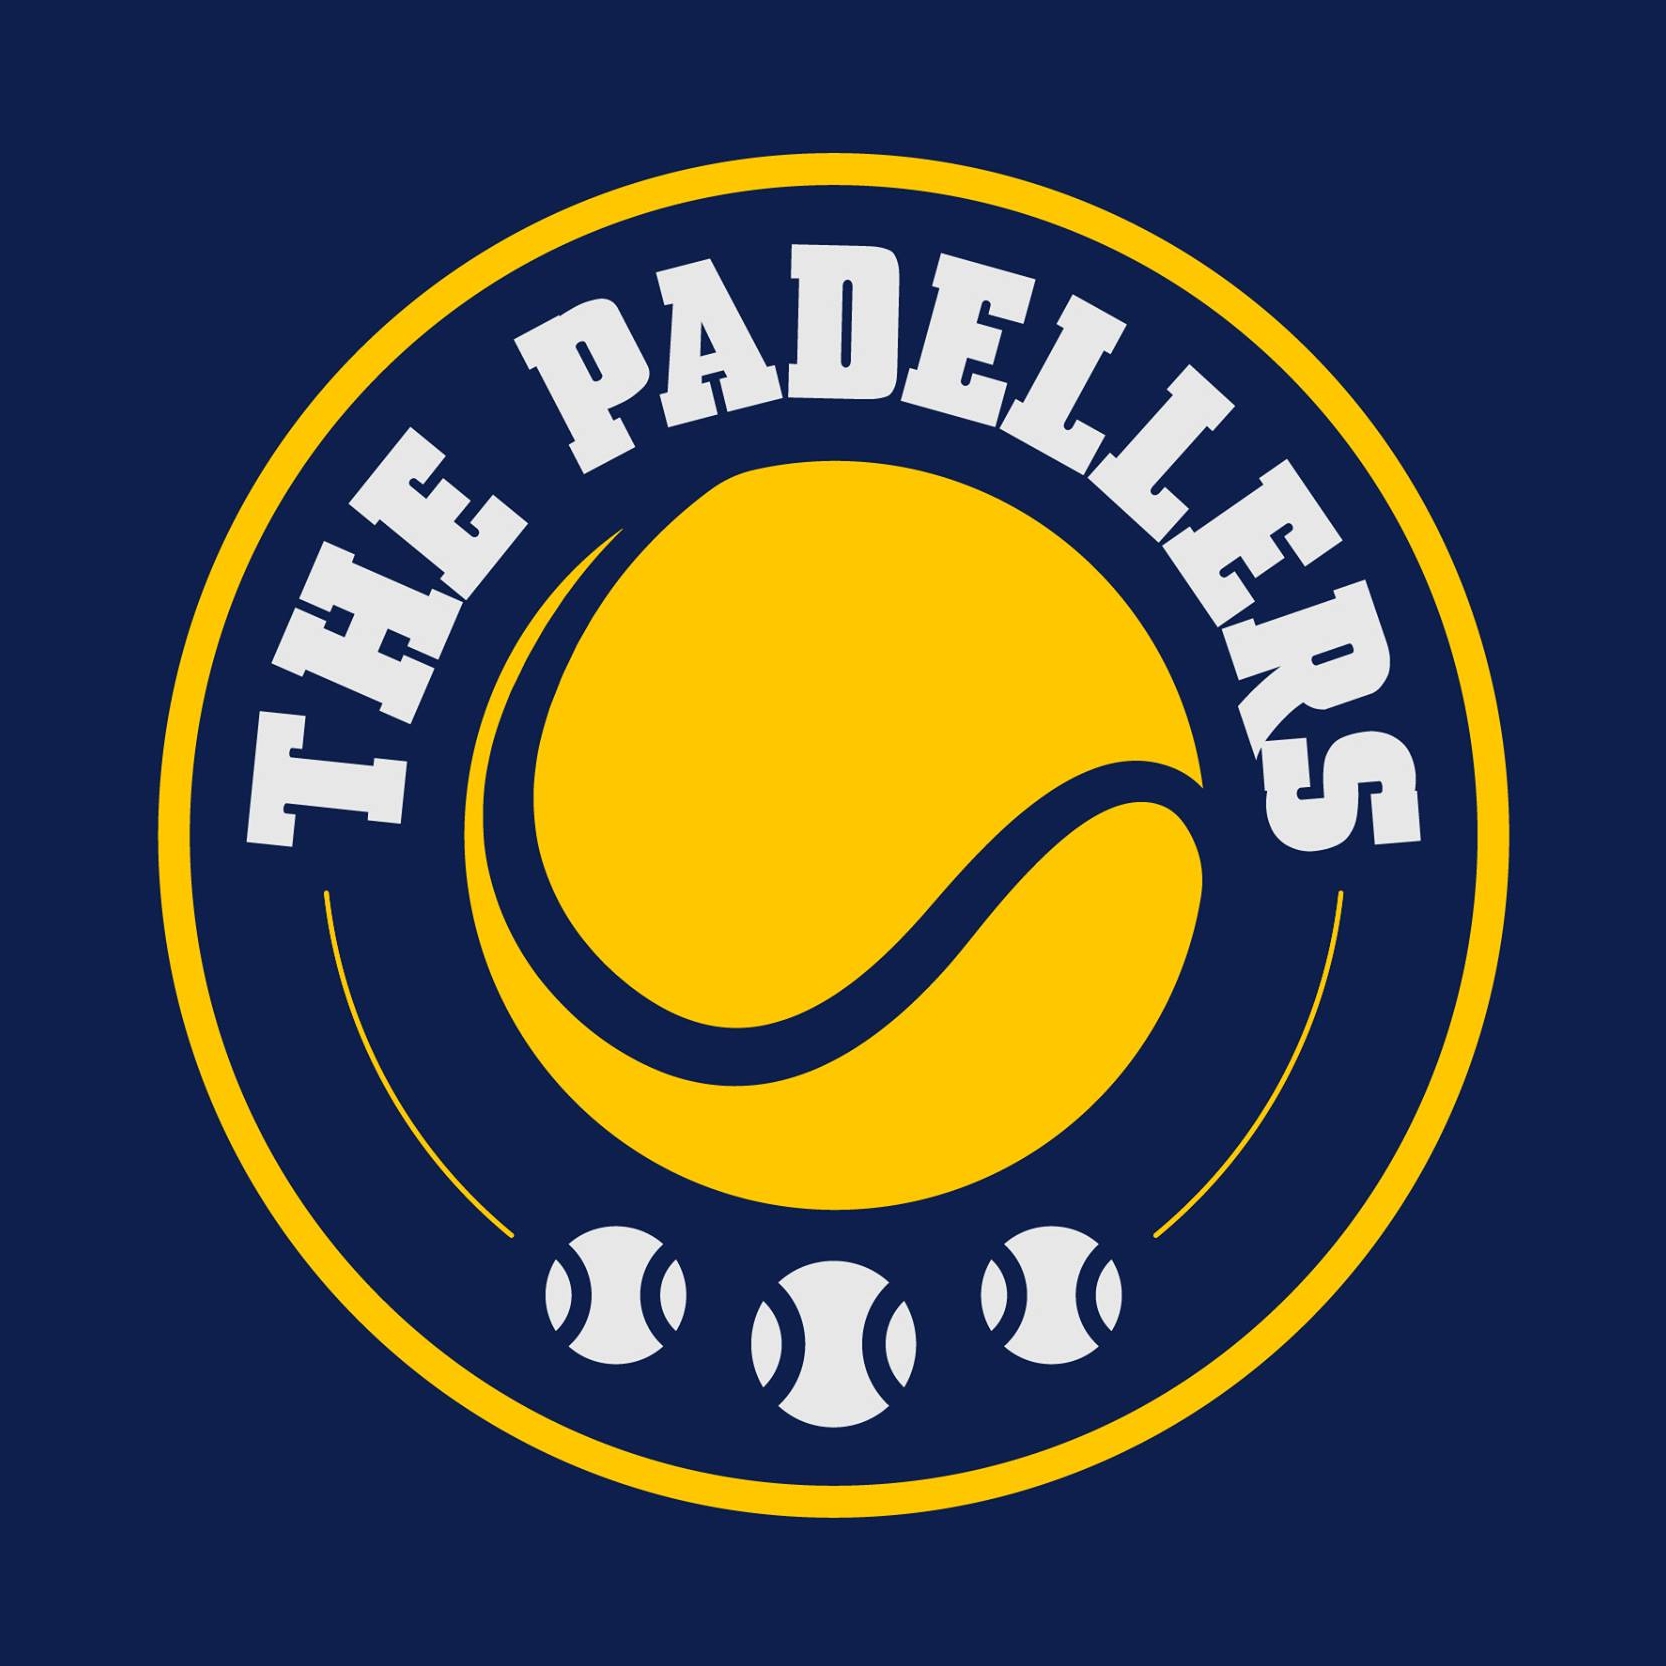 Profile image of venue The Padellers - Doorn